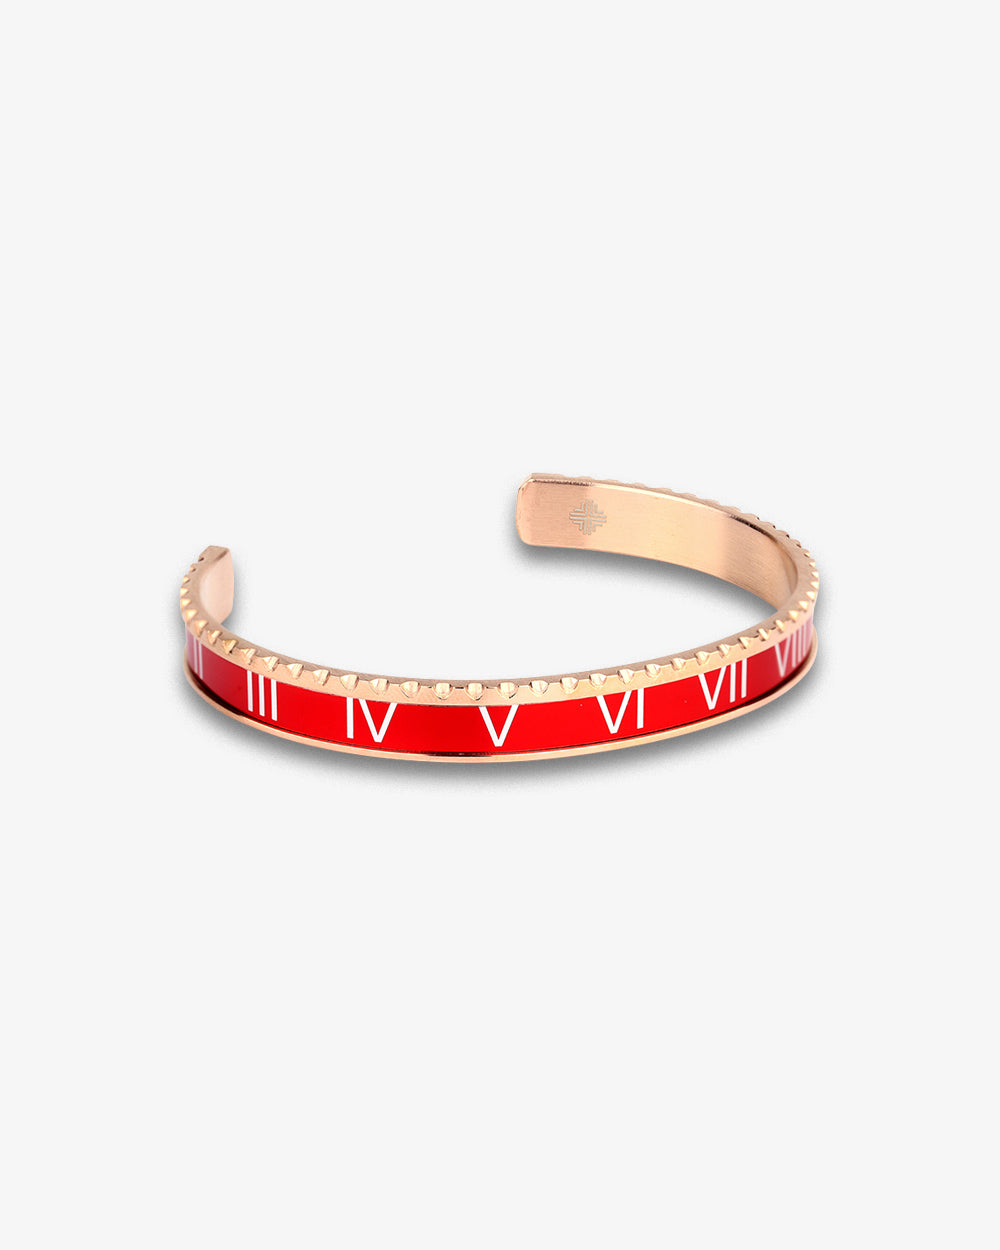 Swiss Concept Classic Roman Numeral Speed Bracelet (Red & Rose Gold) - 18 Karat Finish